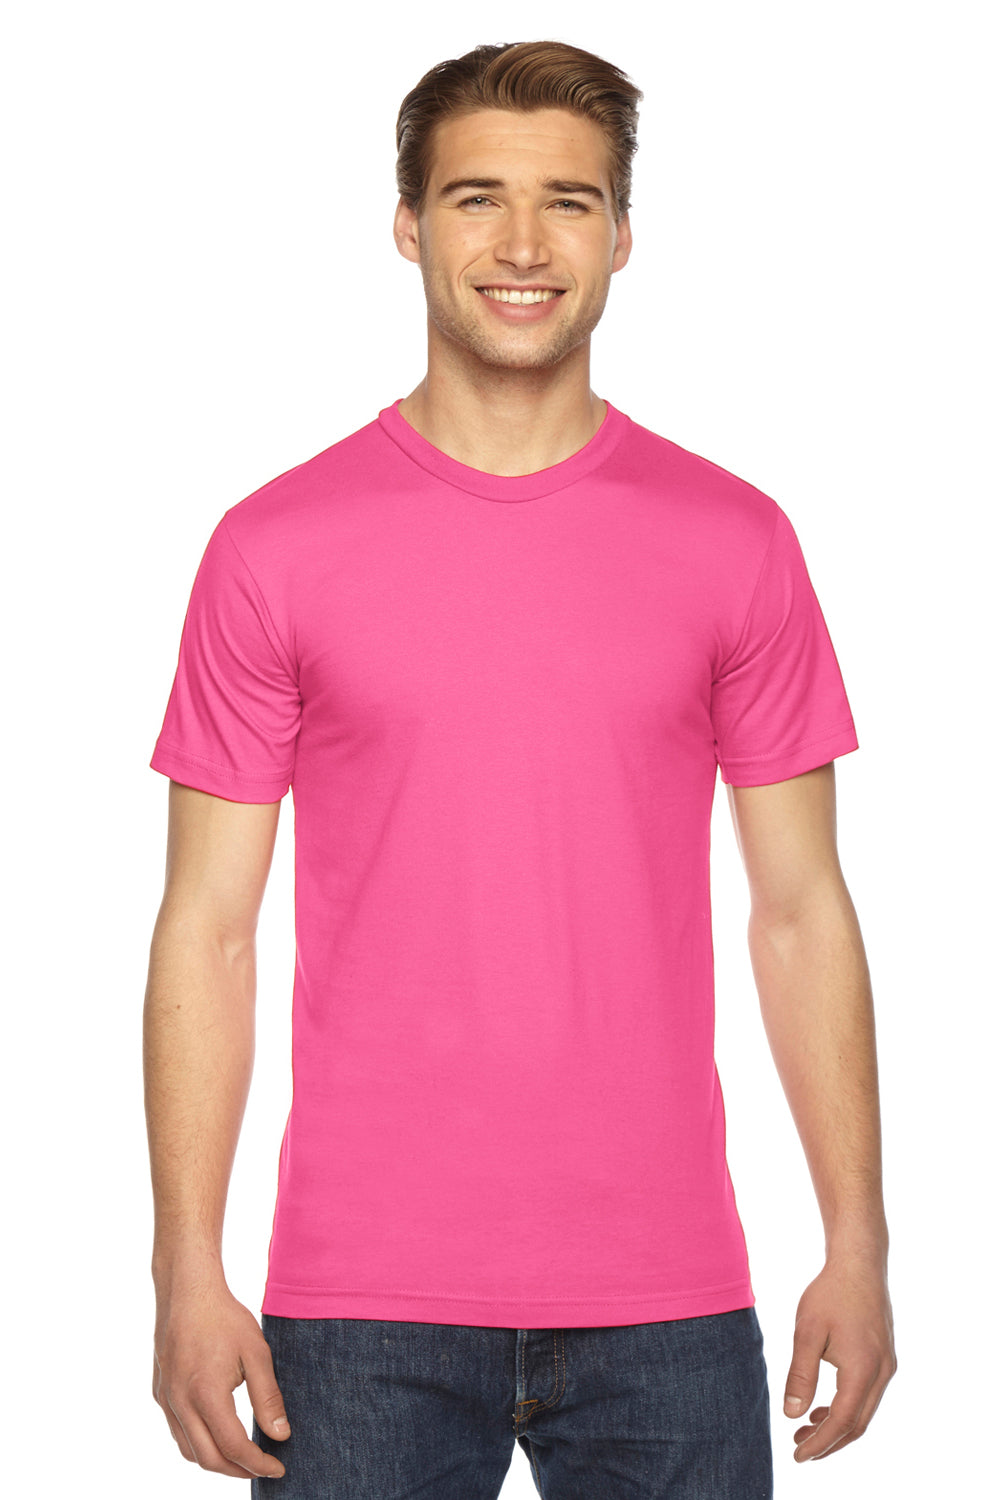 American Apparel 2001 Mens USA Made Fine Jersey Short Sleeve Crewneck T-Shirt Fuchsia Pink Front